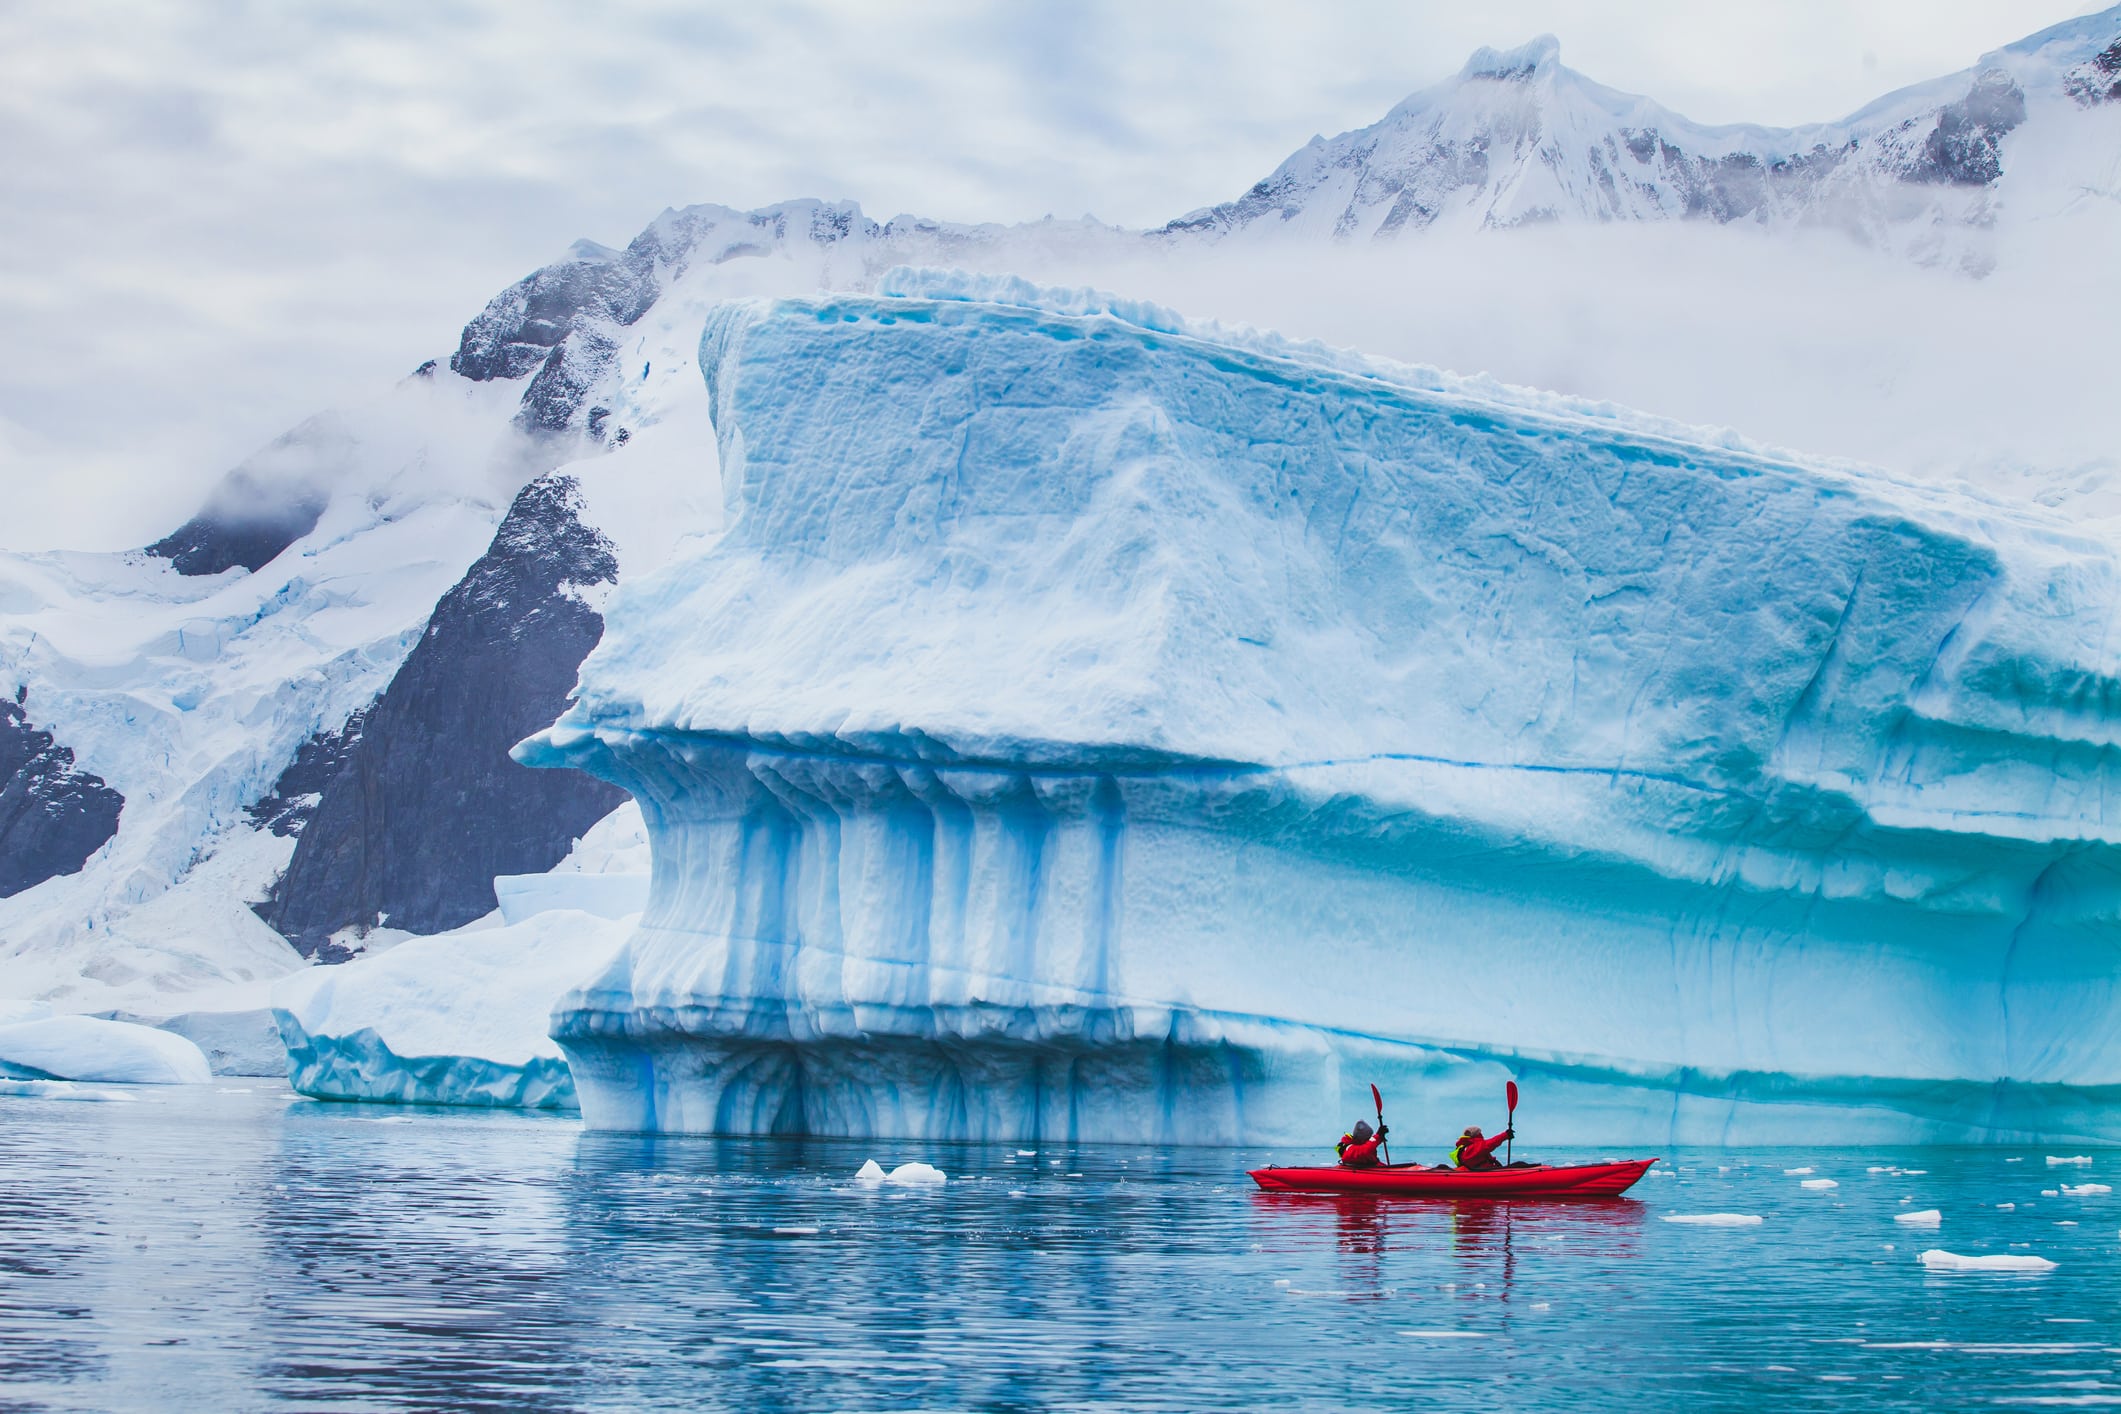 Expedition Kayaking in Antarctica